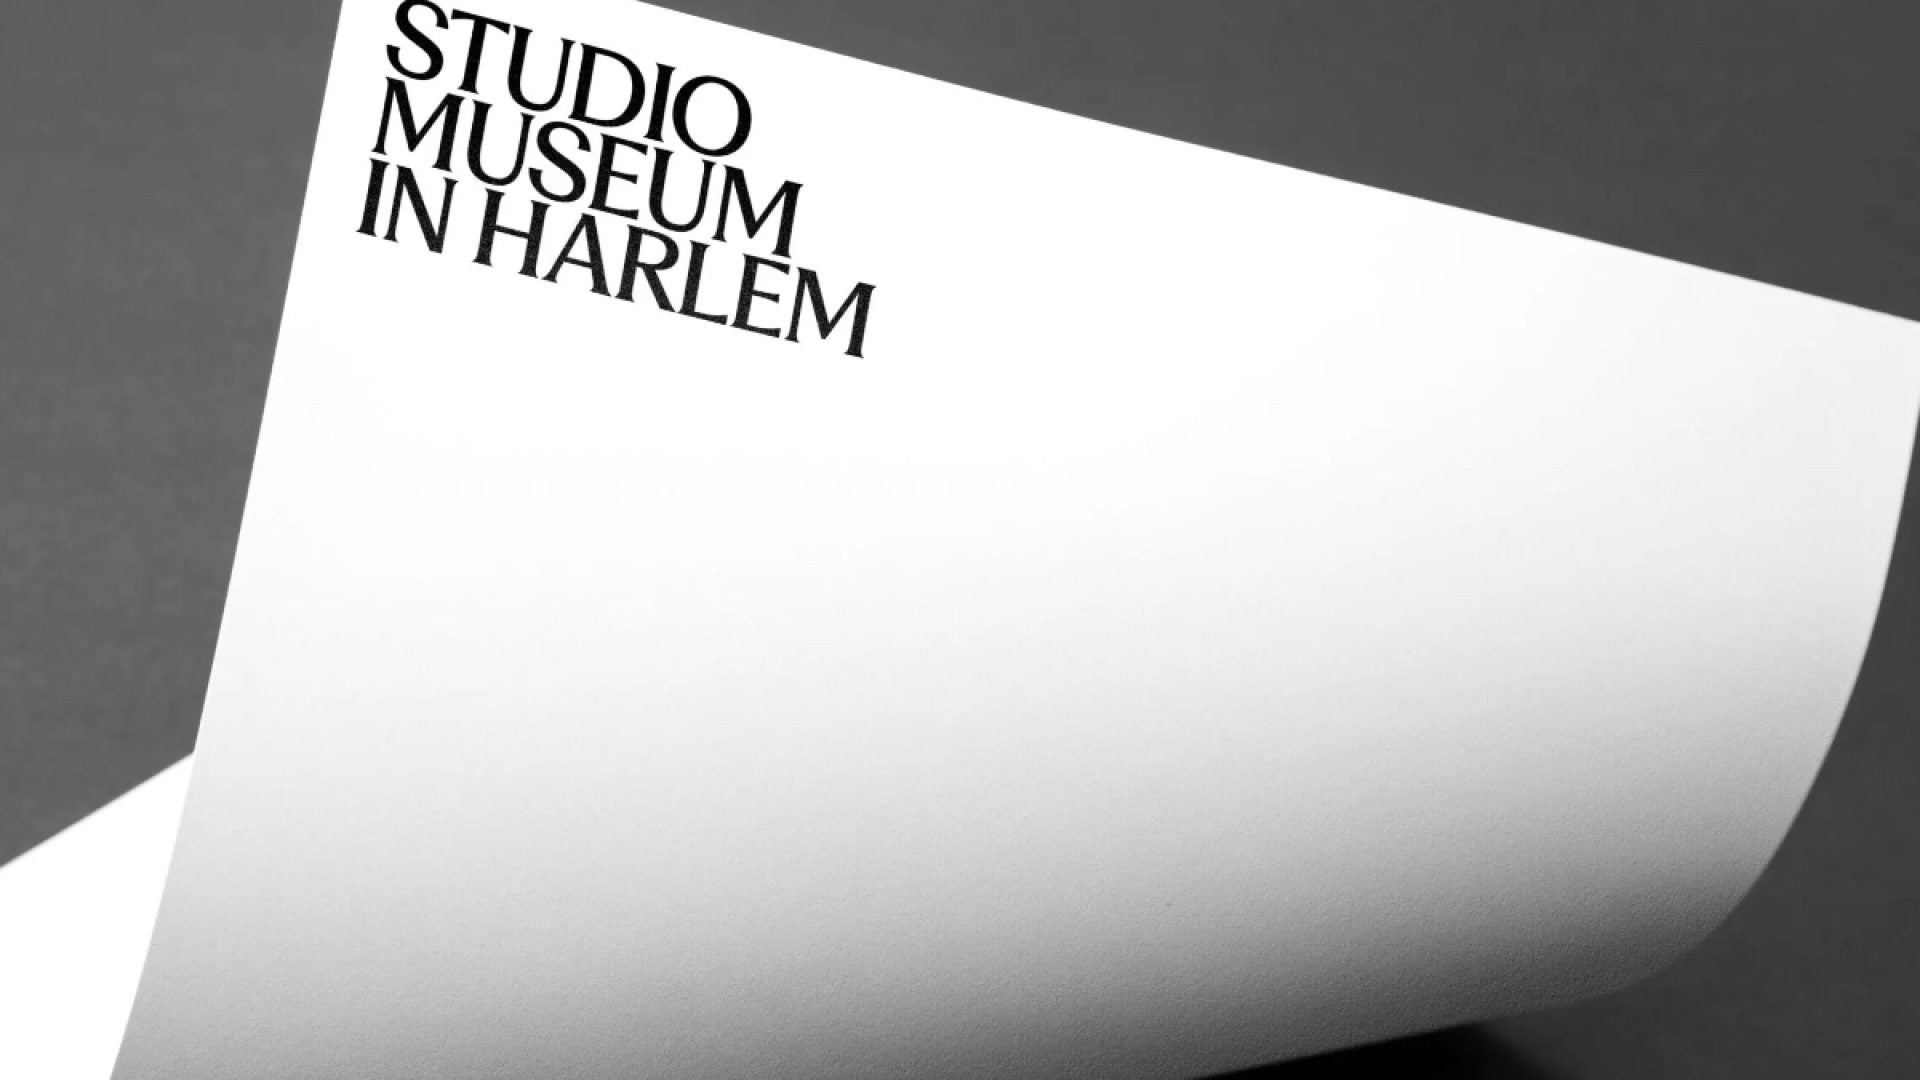 Harlem Studio Museum Celebrates Its Future At Renaissance Hotel